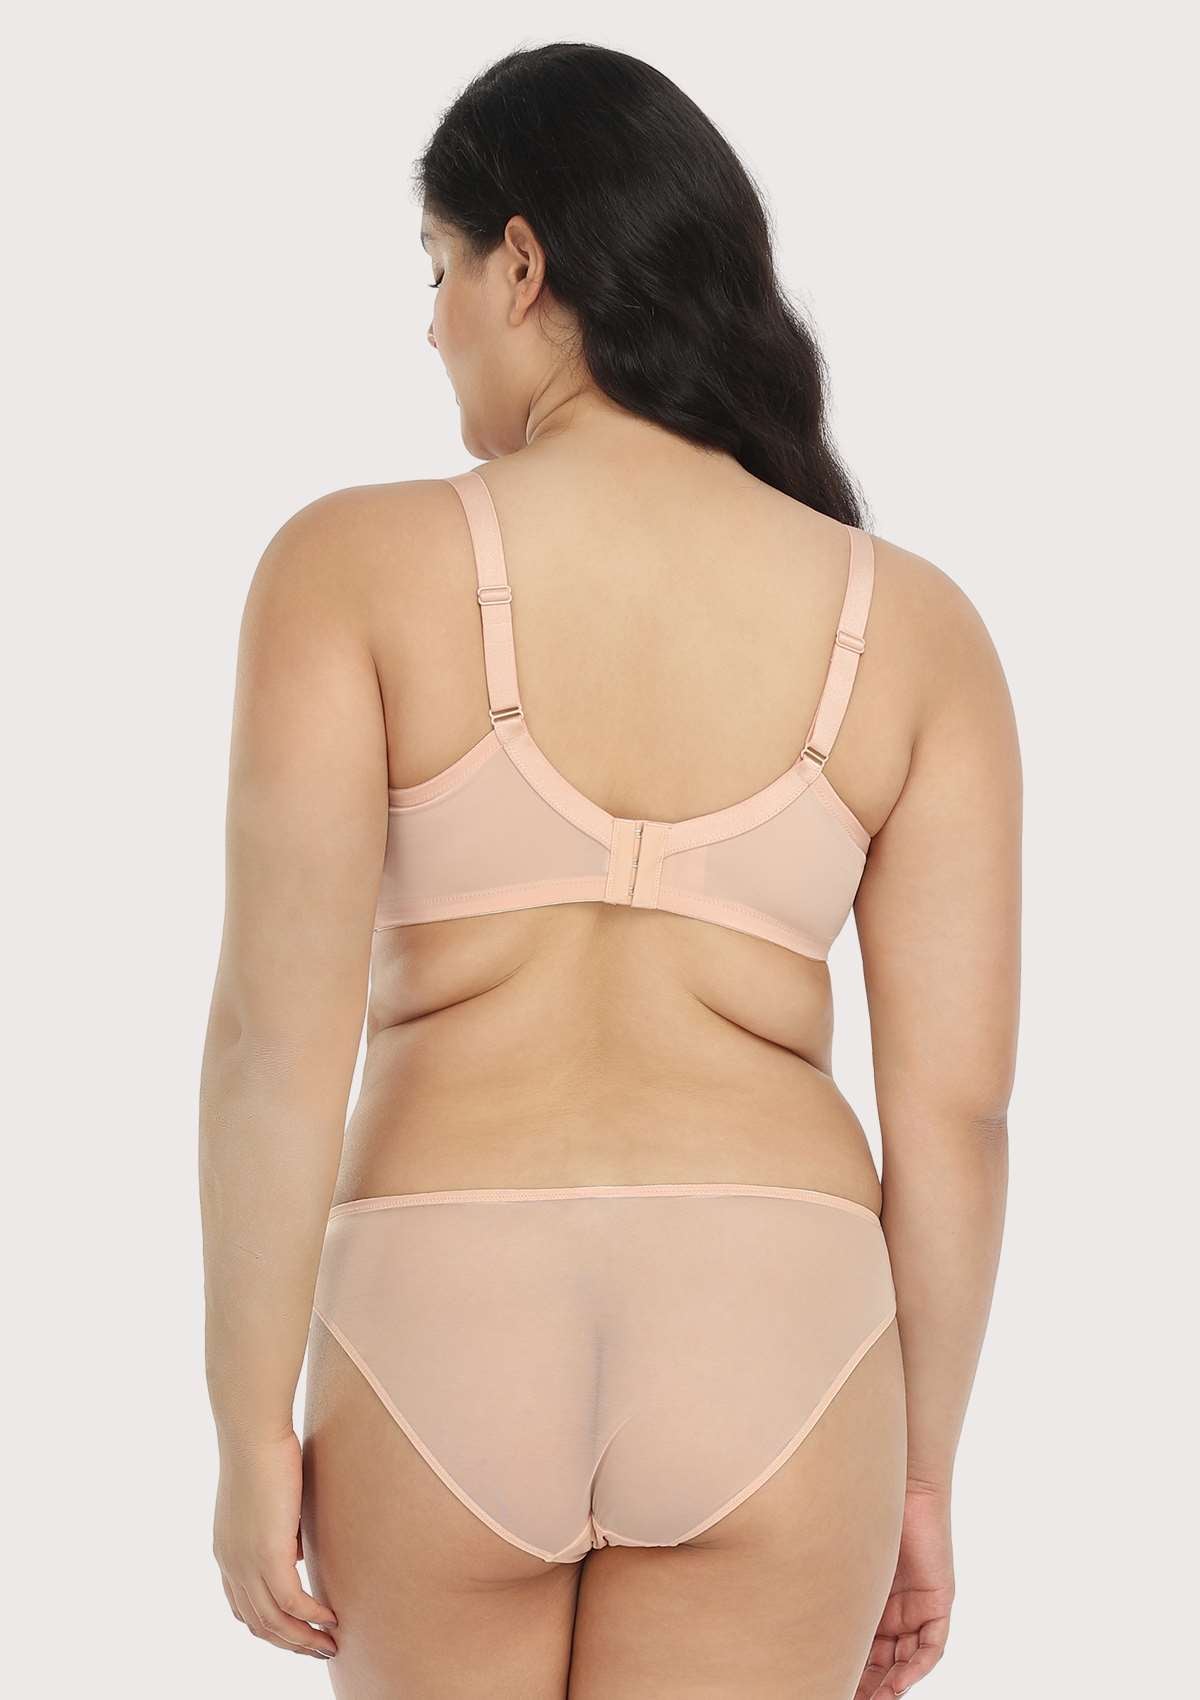 HSIA Sunflower Matching Bra And Panties Set: Comfortable Plus Size Bra - Pink / 40 / C